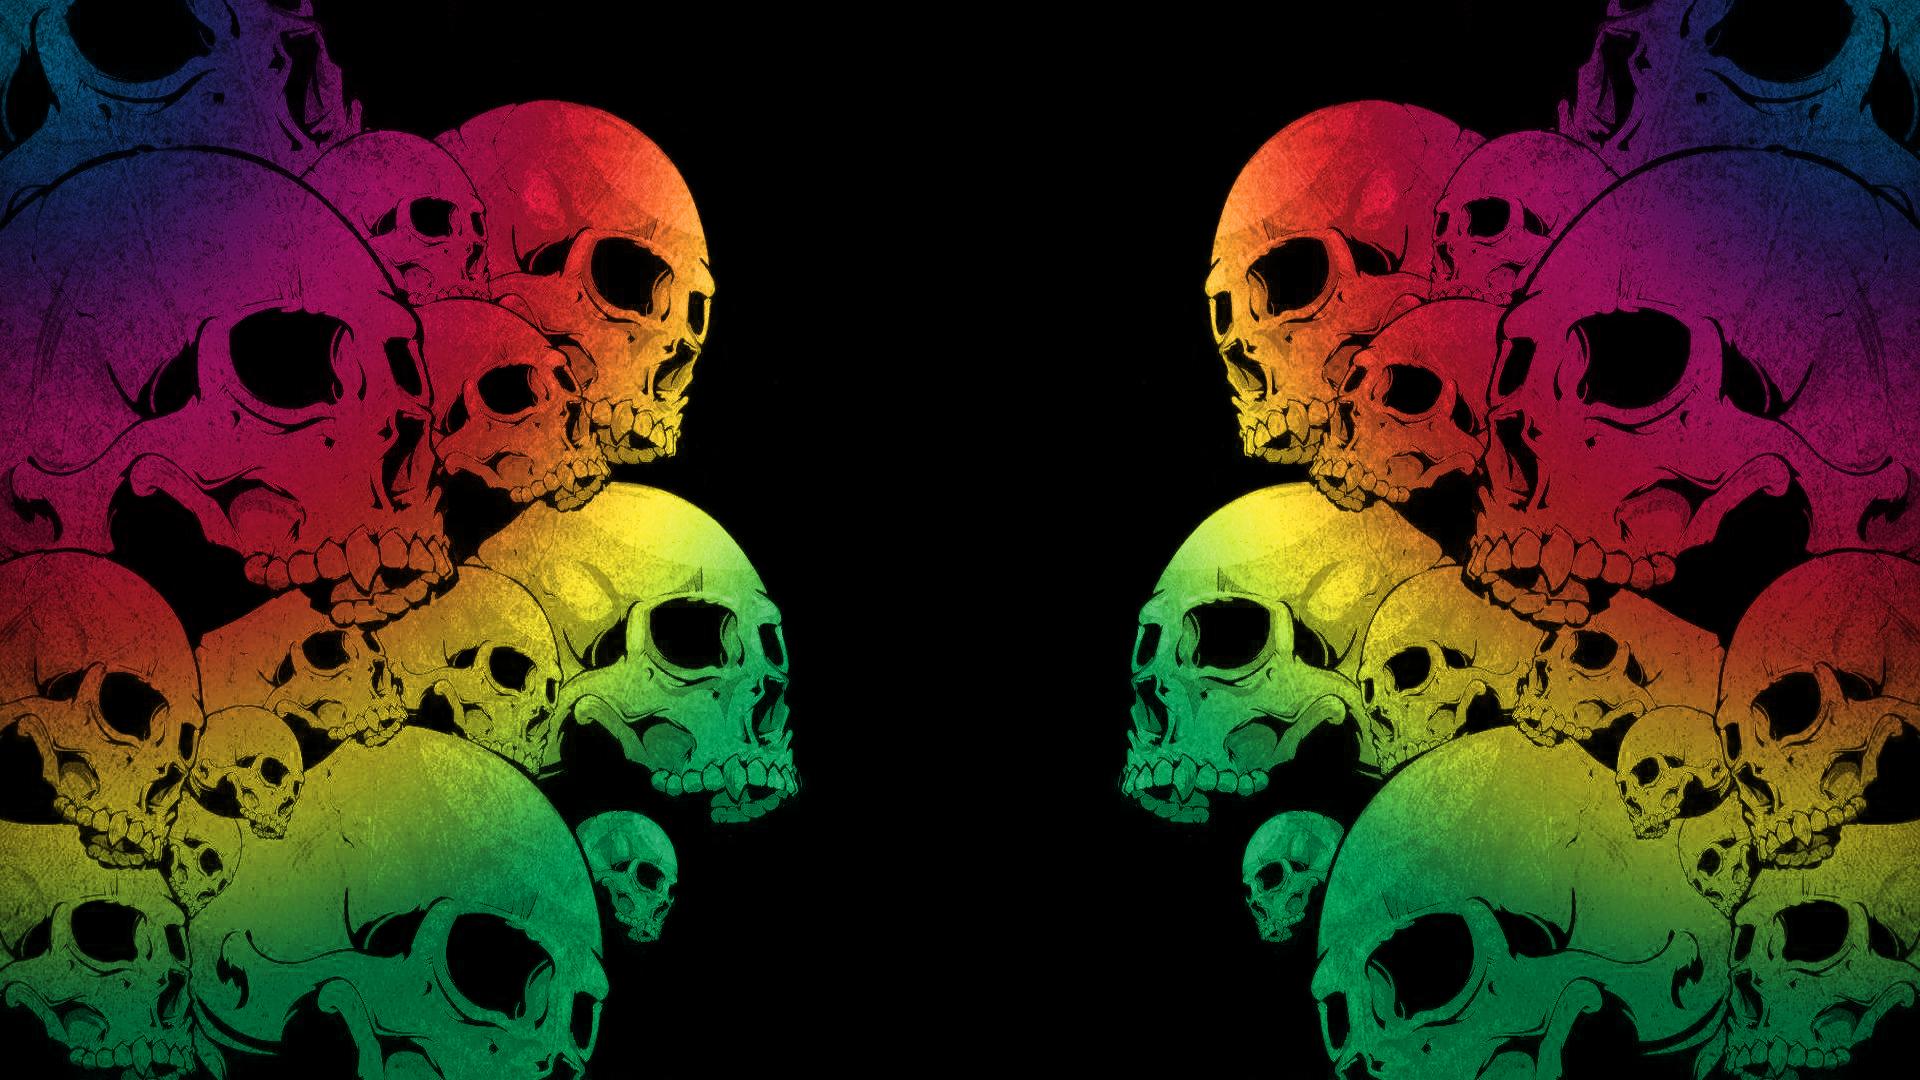 Free download Cool Neon Skull Desktop Background [1920x1080] for your Desktop, Mobile & Tablet. Explore Skull Wallpaper for Computer. Free Skulls Wallpaper, Free Skull Wallpaper, Free Skull Wallpaper Downloads